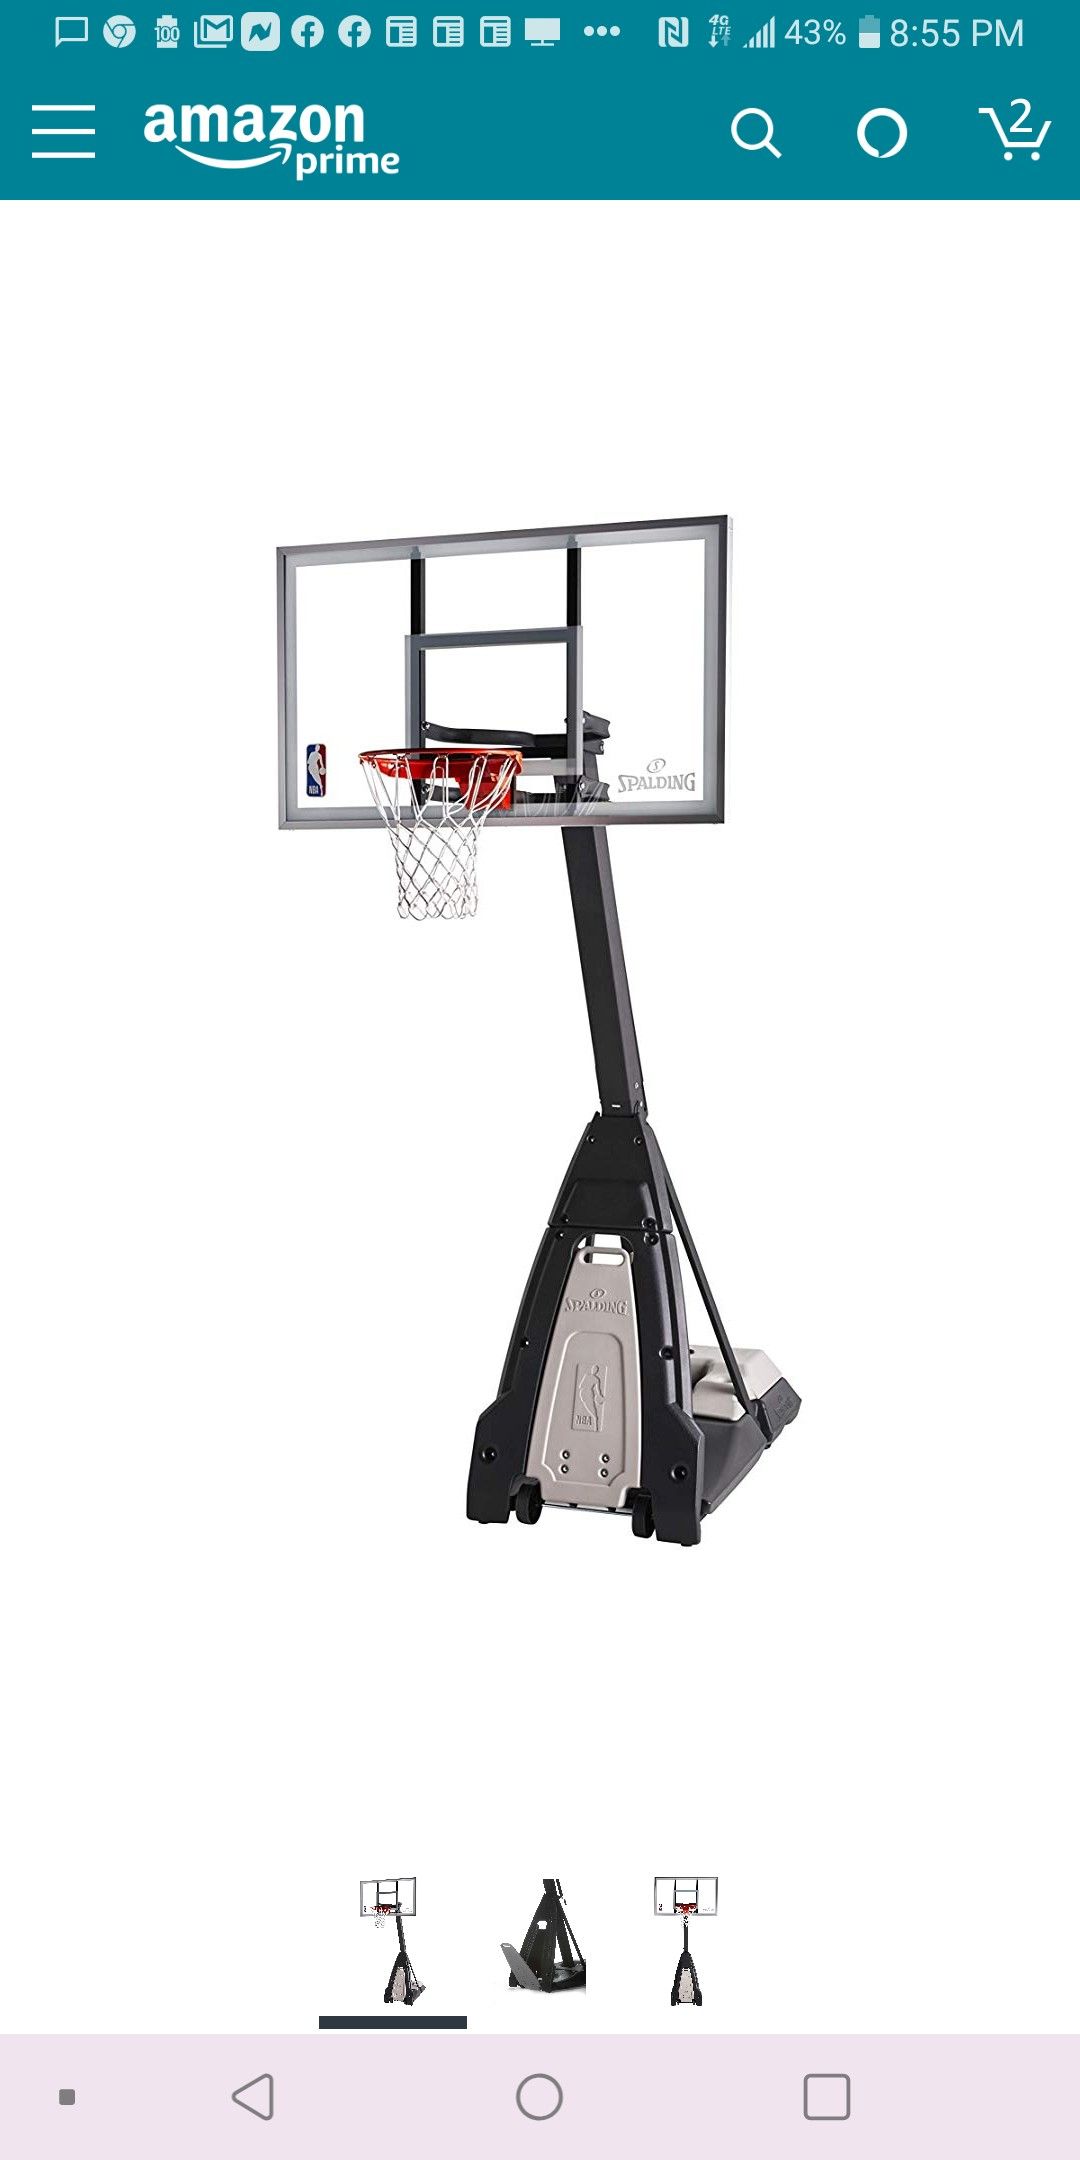 Spalding "The Beast" Portable Basketball Hoop. 60 Inch Glass Backboard. No reasonable offer refused.